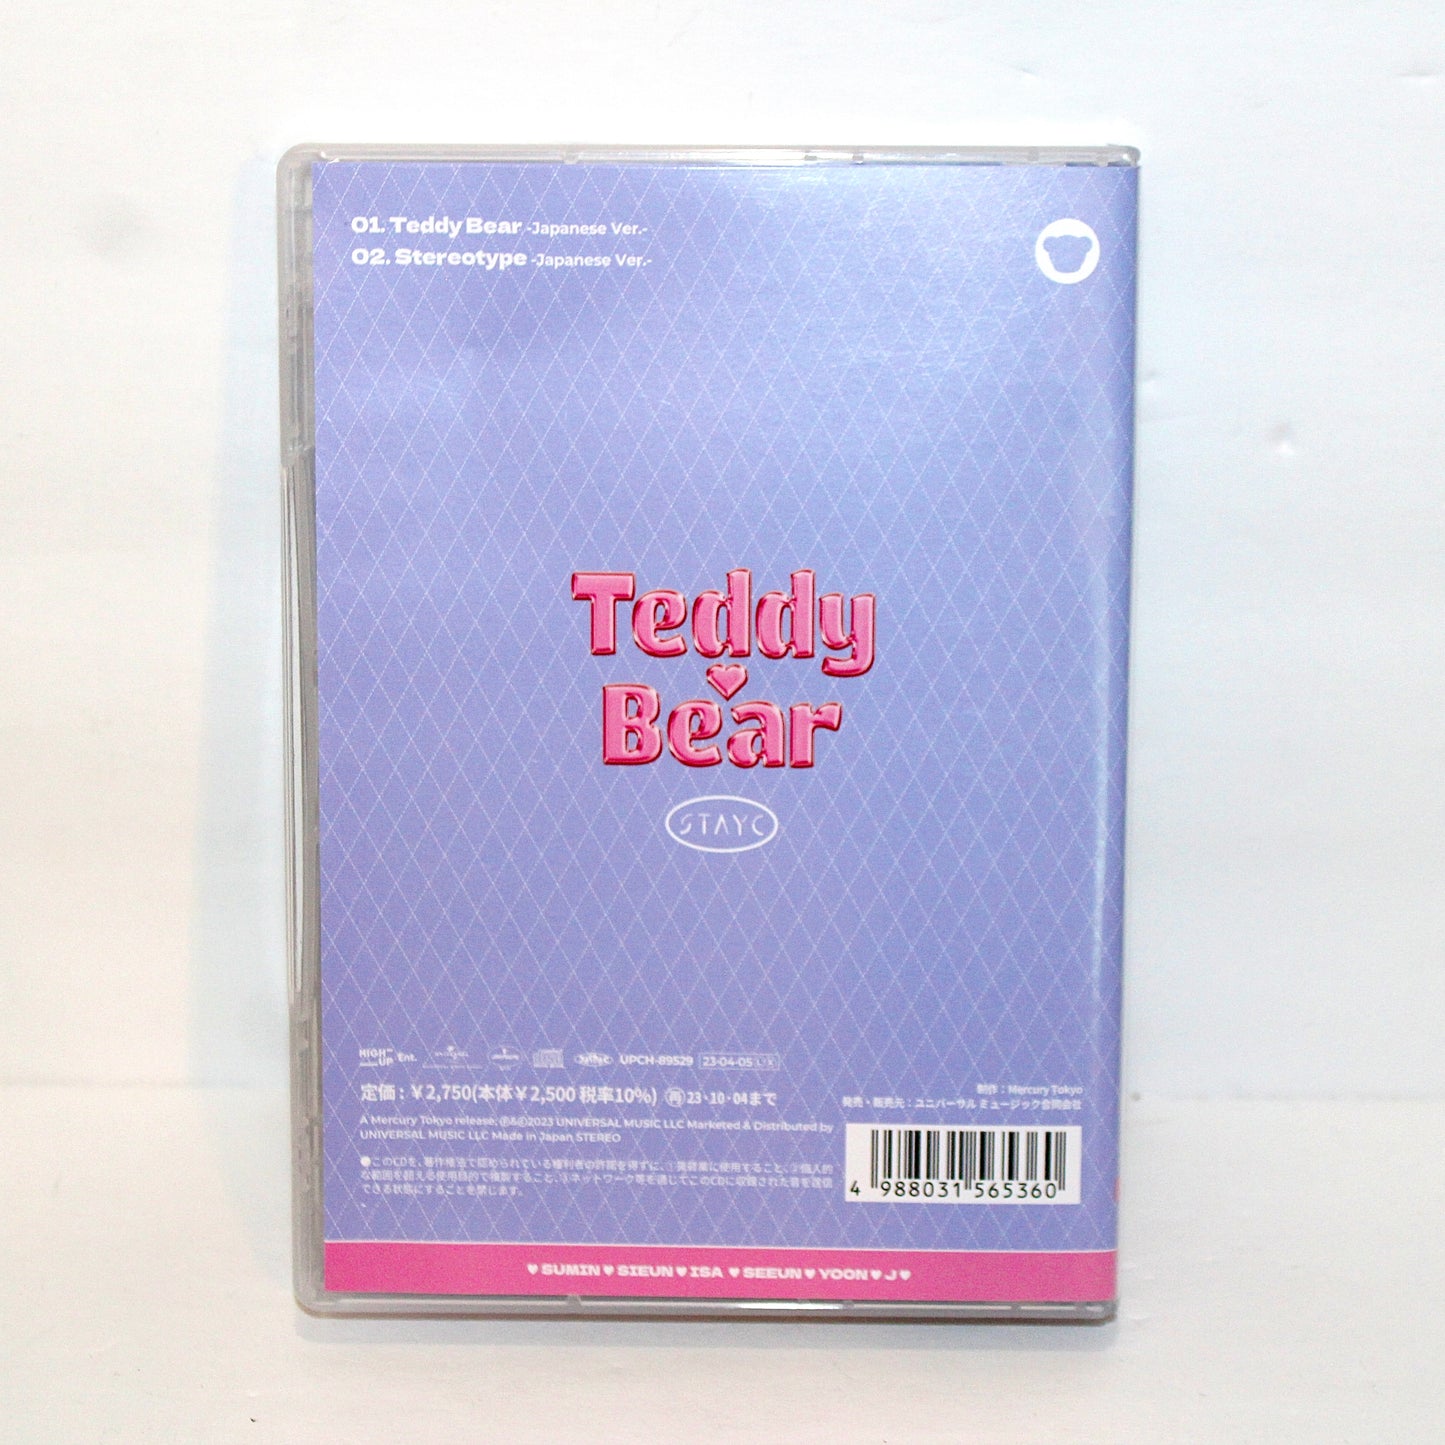 STAYC 2nd Japanese Single Album: Teddy Bear | Limited Ver.